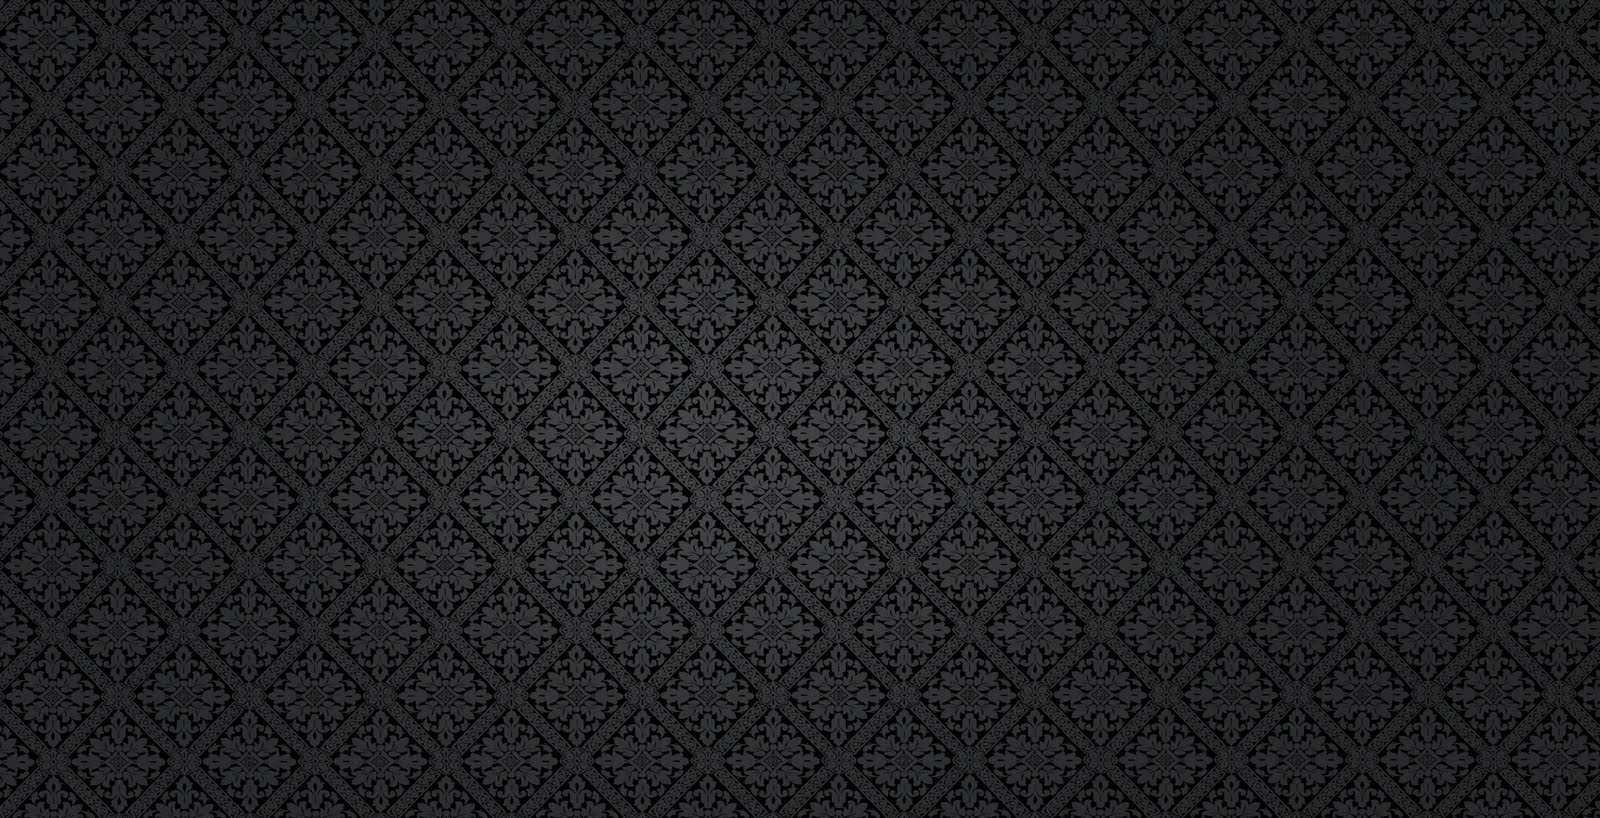 Download Dark Flower Texture Wallpaper 1600x818 | Full HD Wallpapers